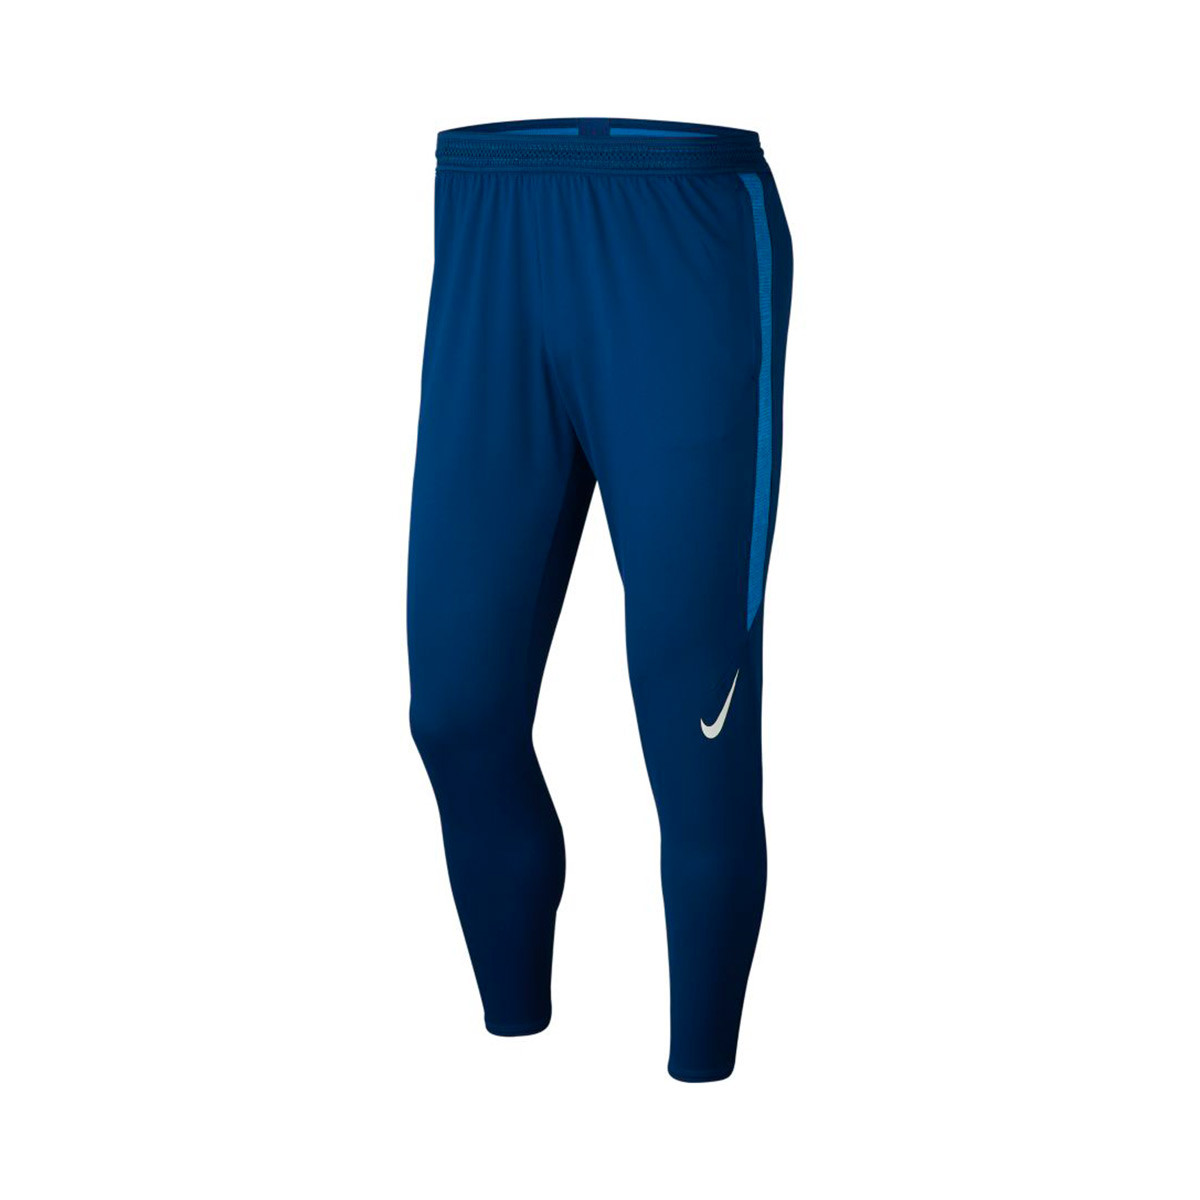 pants Nike Dry Strike KPZ Coastal blue 